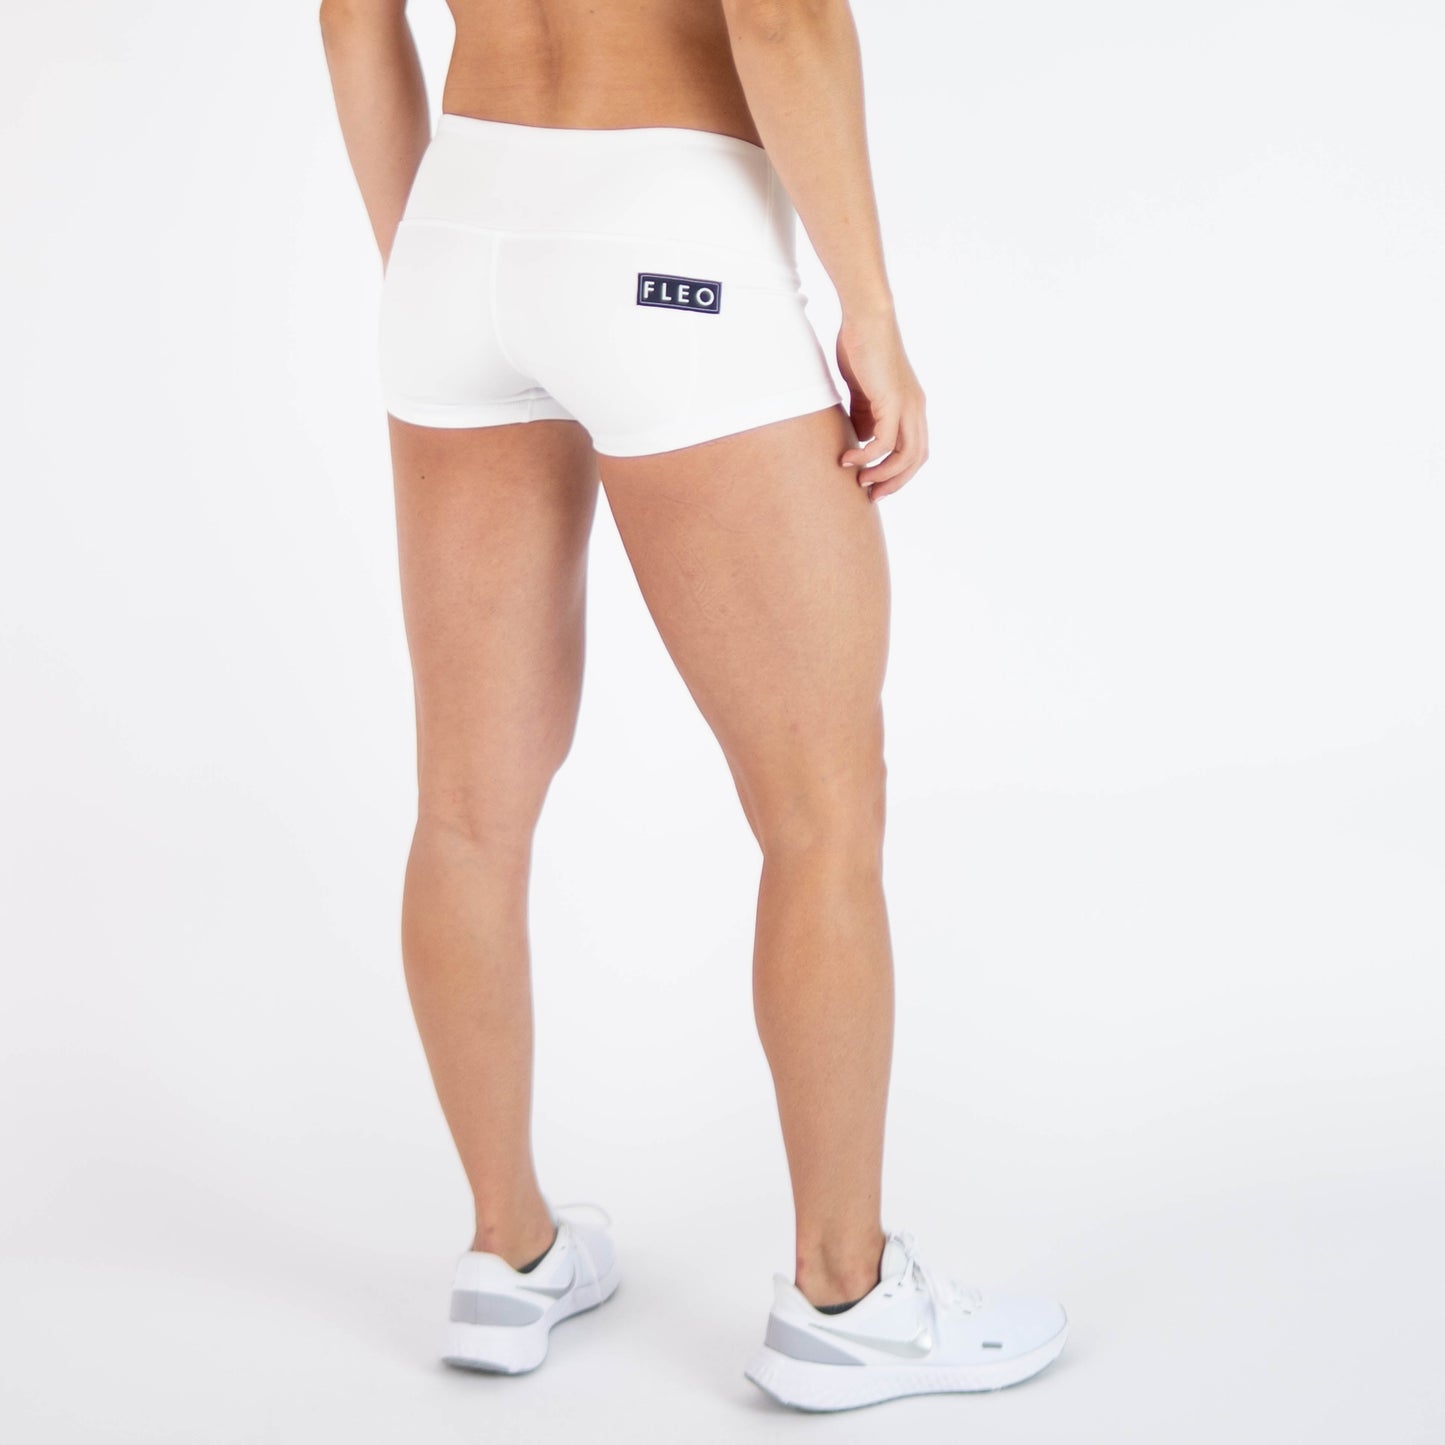 FLEO White Shorts (Low-rise Contour)